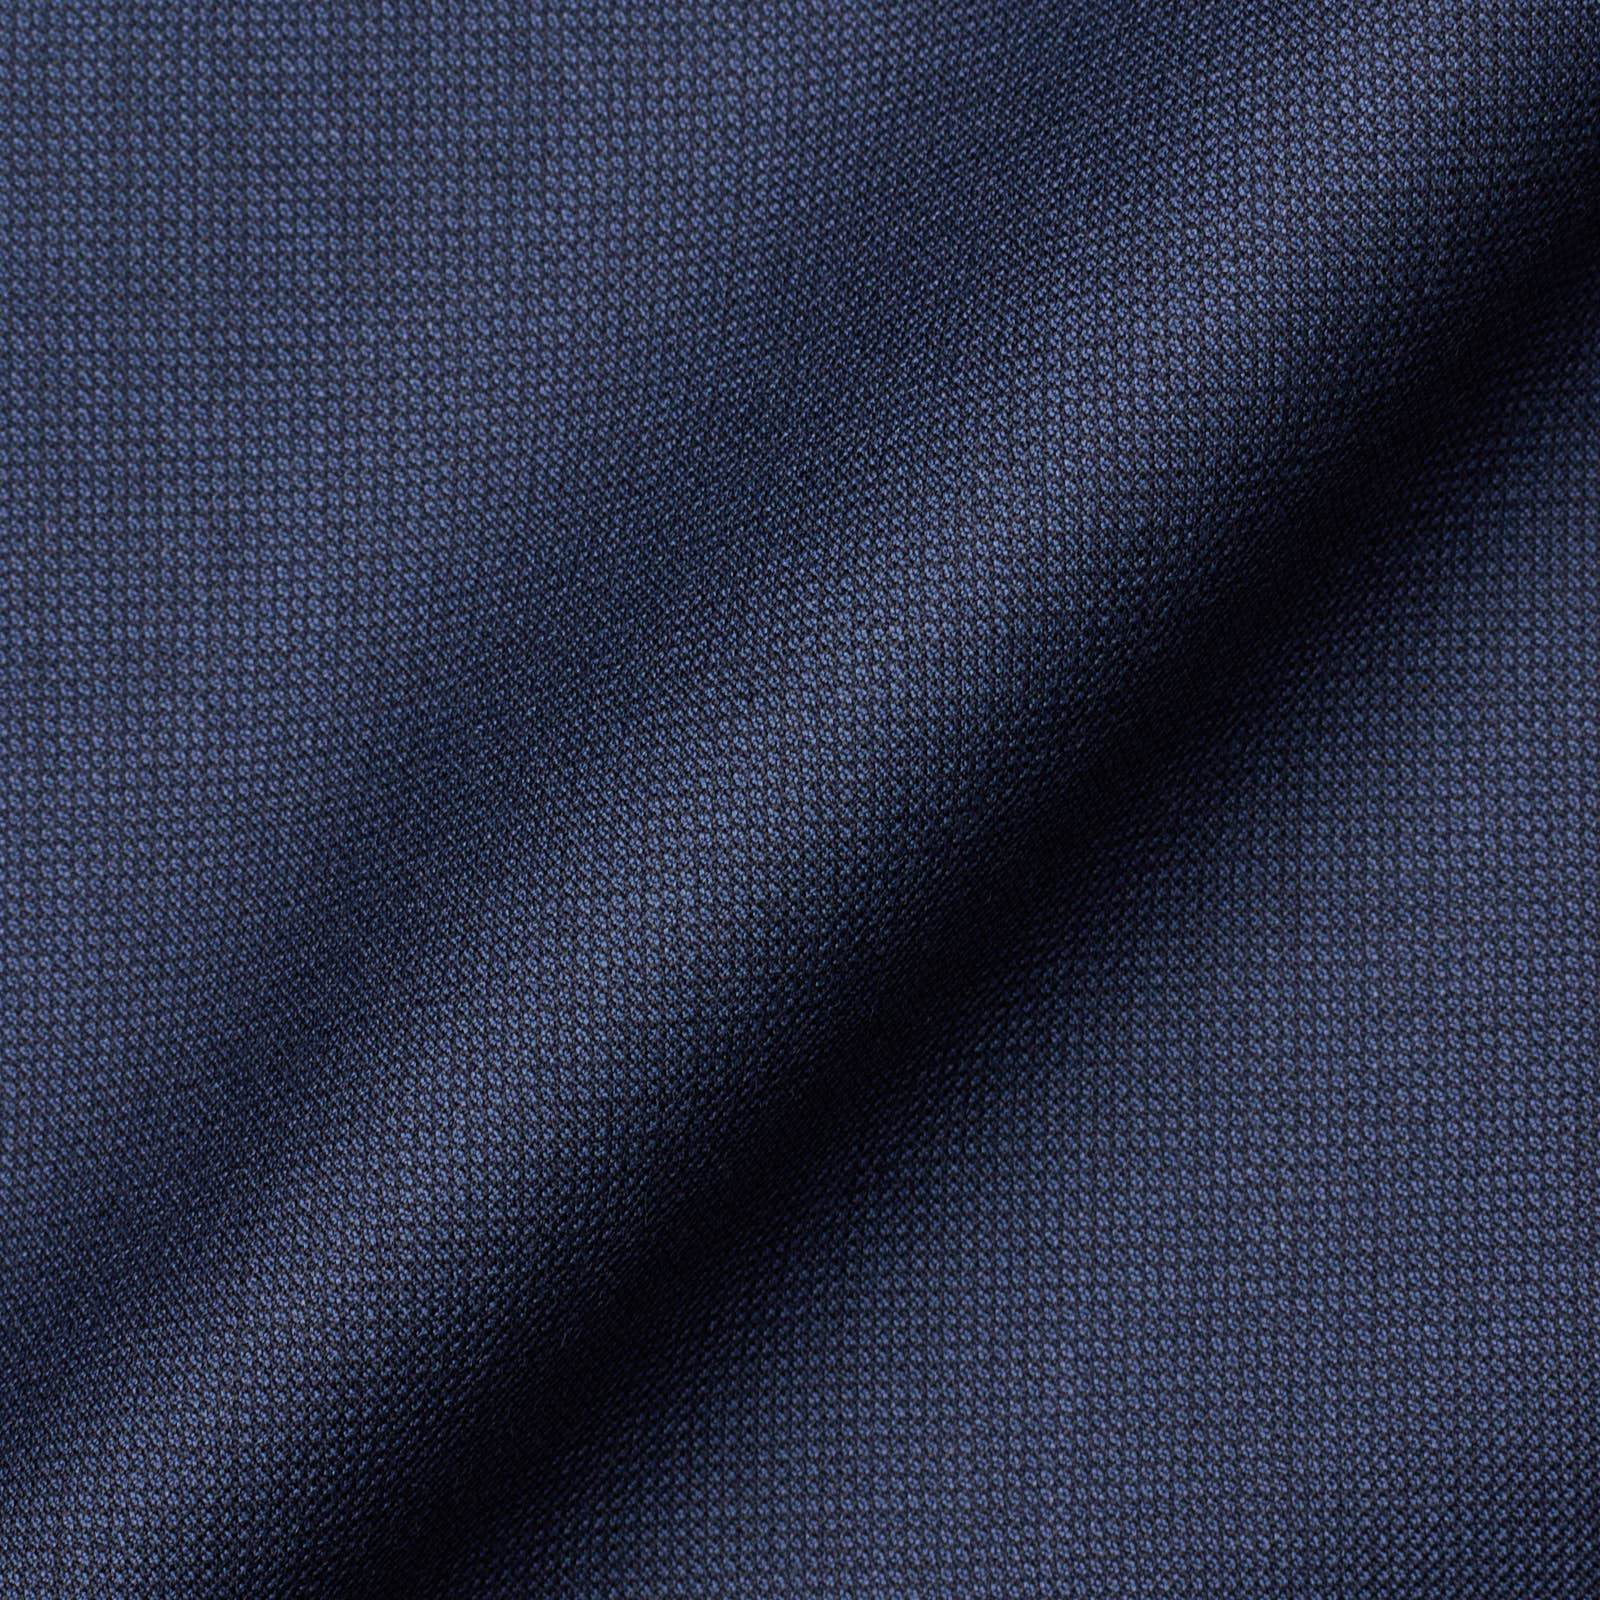 KITON "Diamante Blue" Handmade Blue Super 150's Wool Suit EU 60 NEW US 50